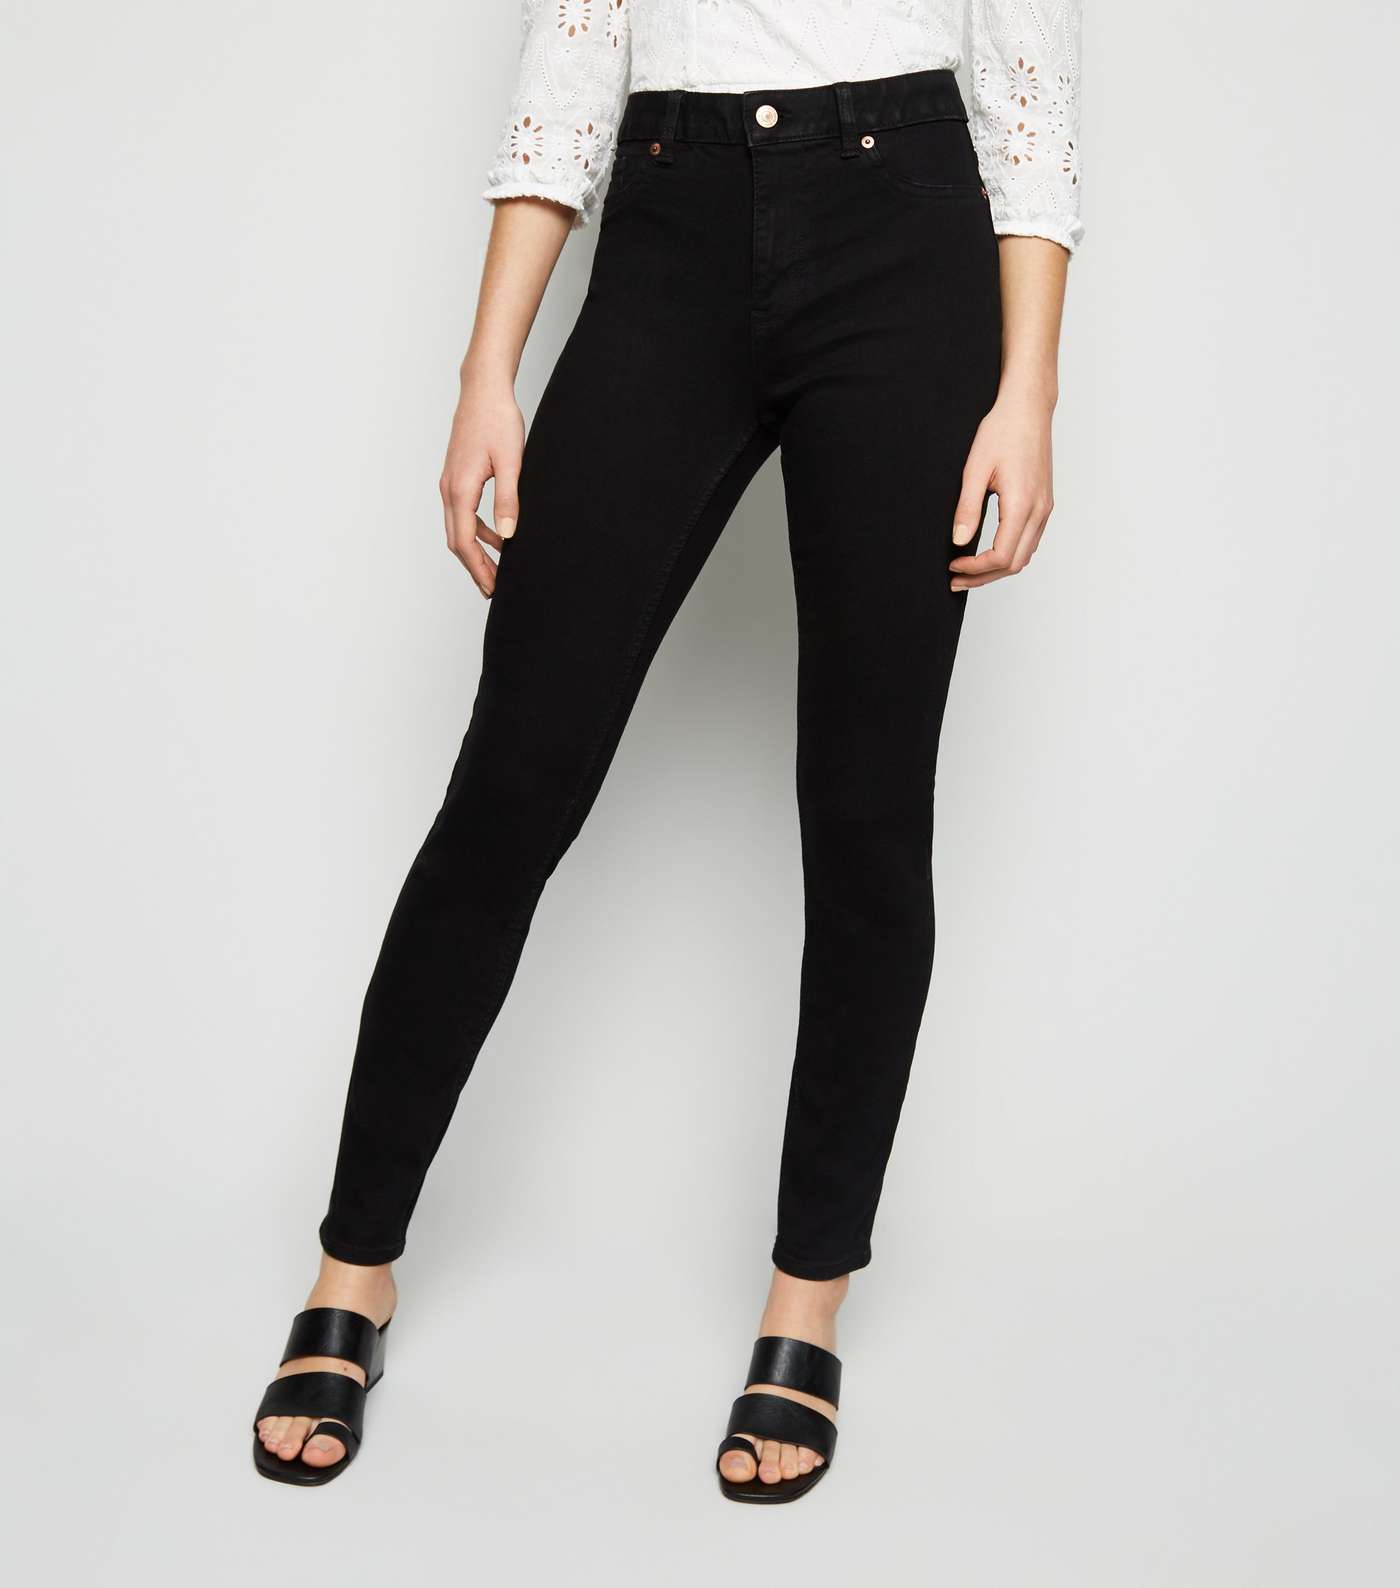 Black Jenna Skinny Jeans Image 2